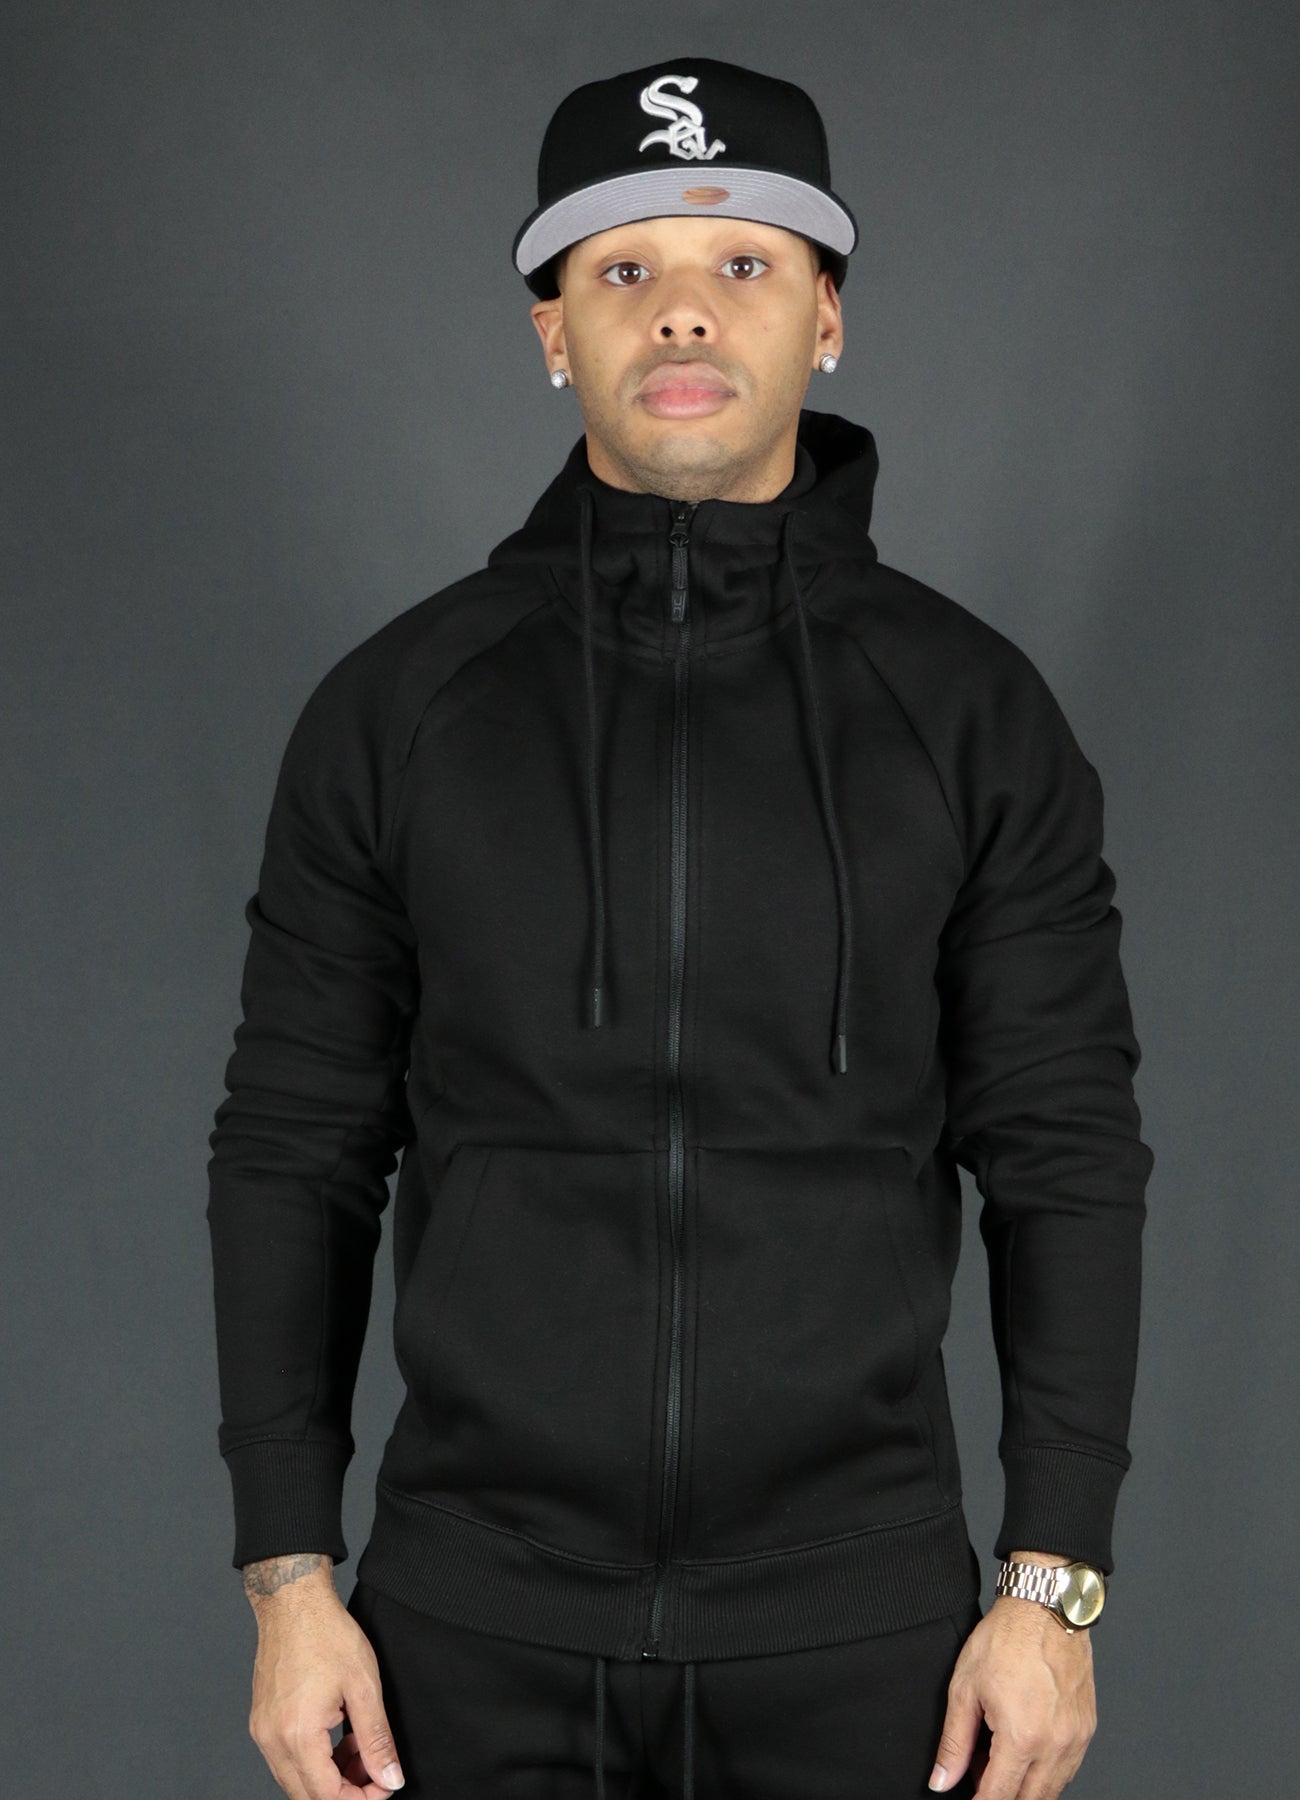 The black basic tech fleece zipup hoodie by Jordan Craig.